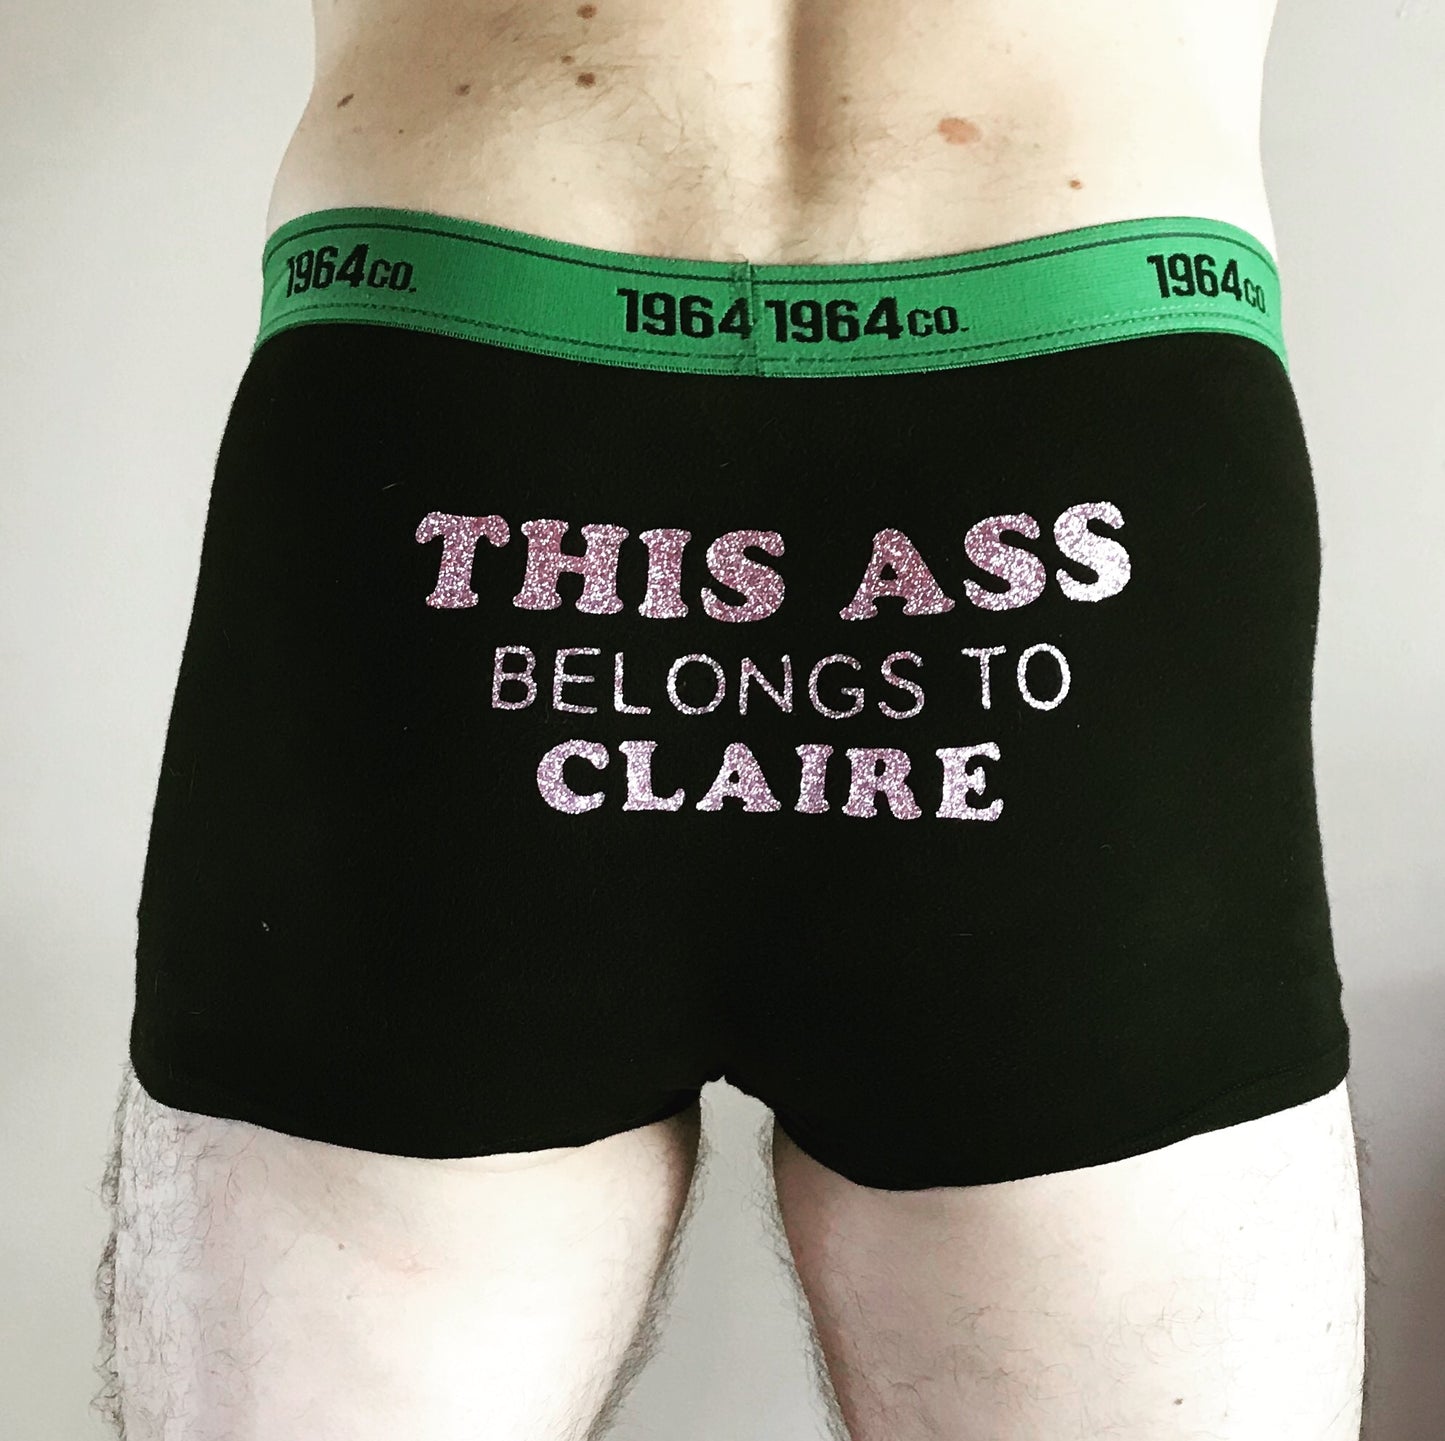 This Ass belong to